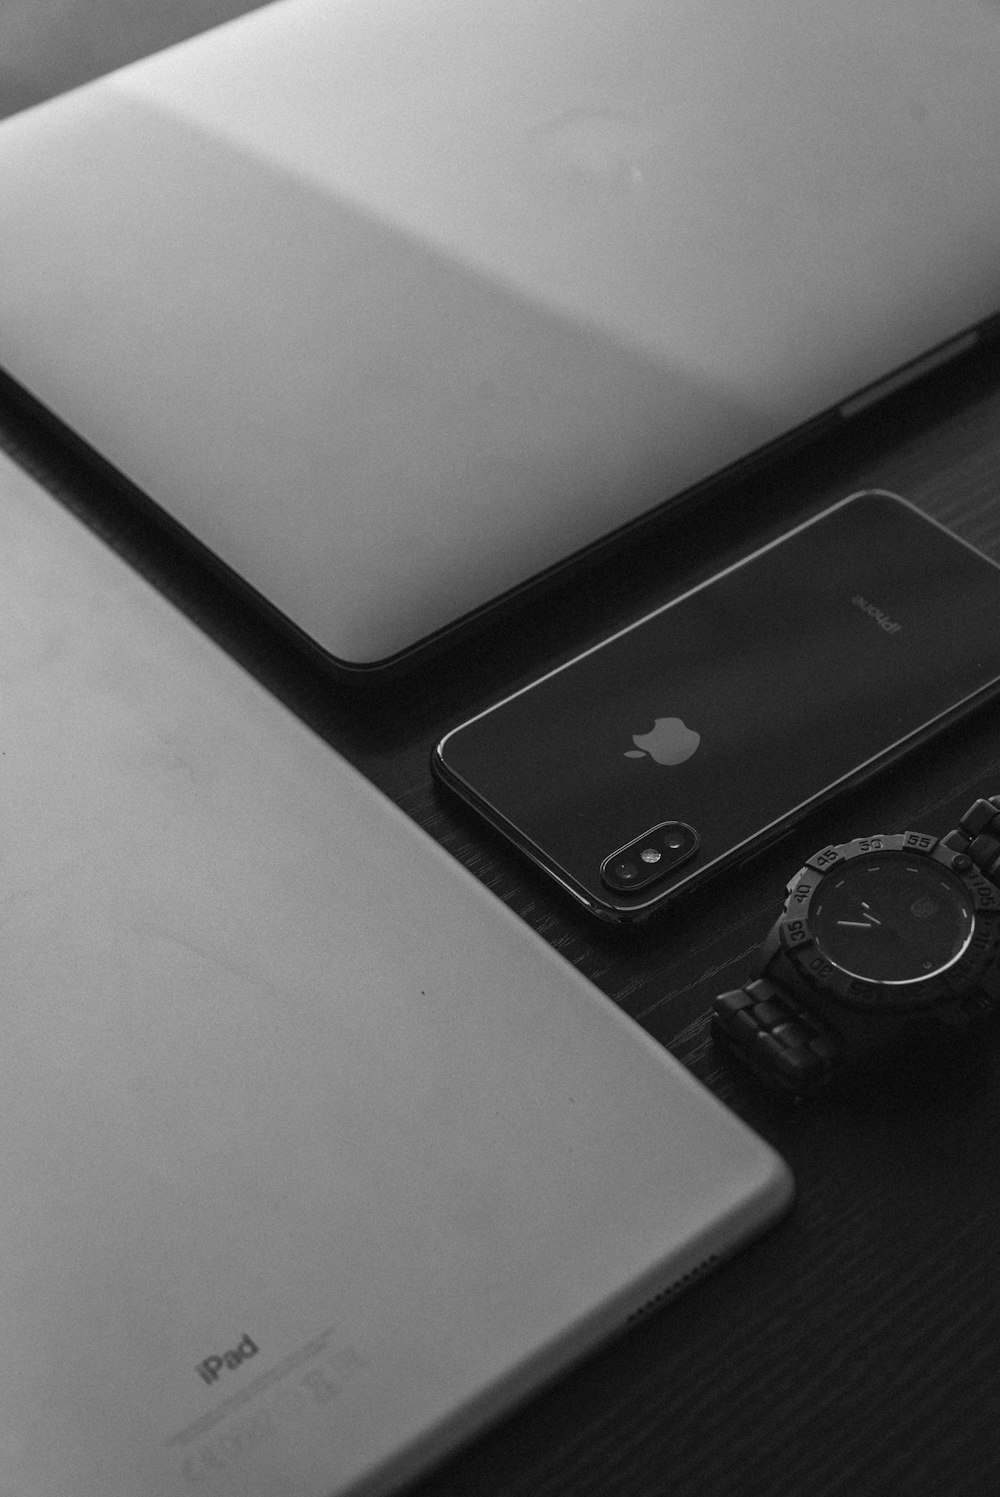 Apple MacBook argento, iPad argento, iPhone X grigio siderale e orologio analogico nero